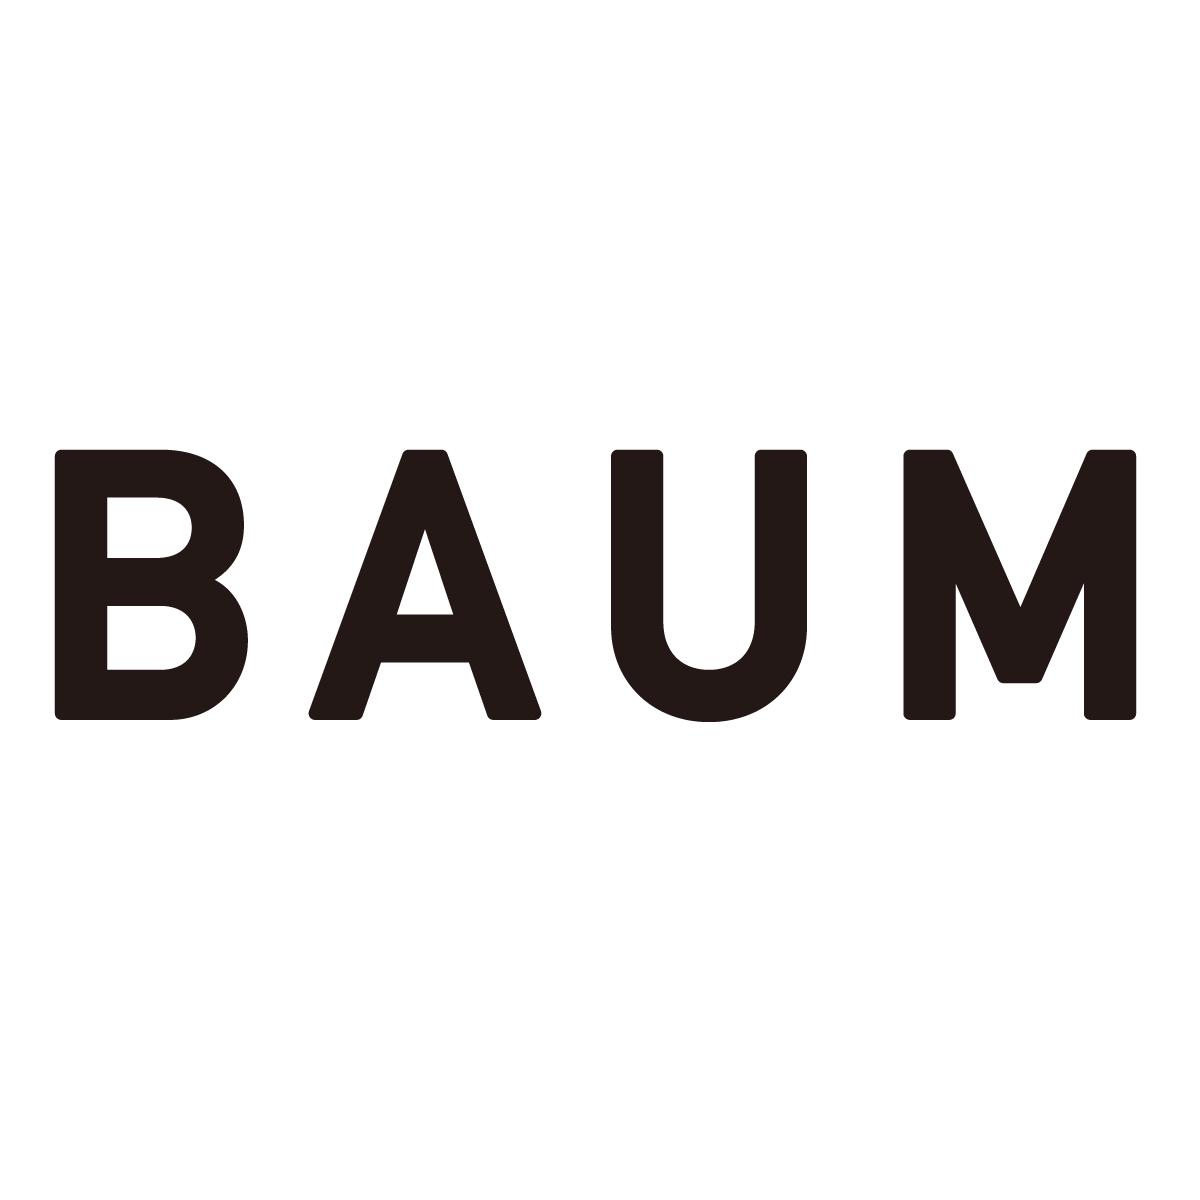 BAUM LTD. profile on Qualified.One